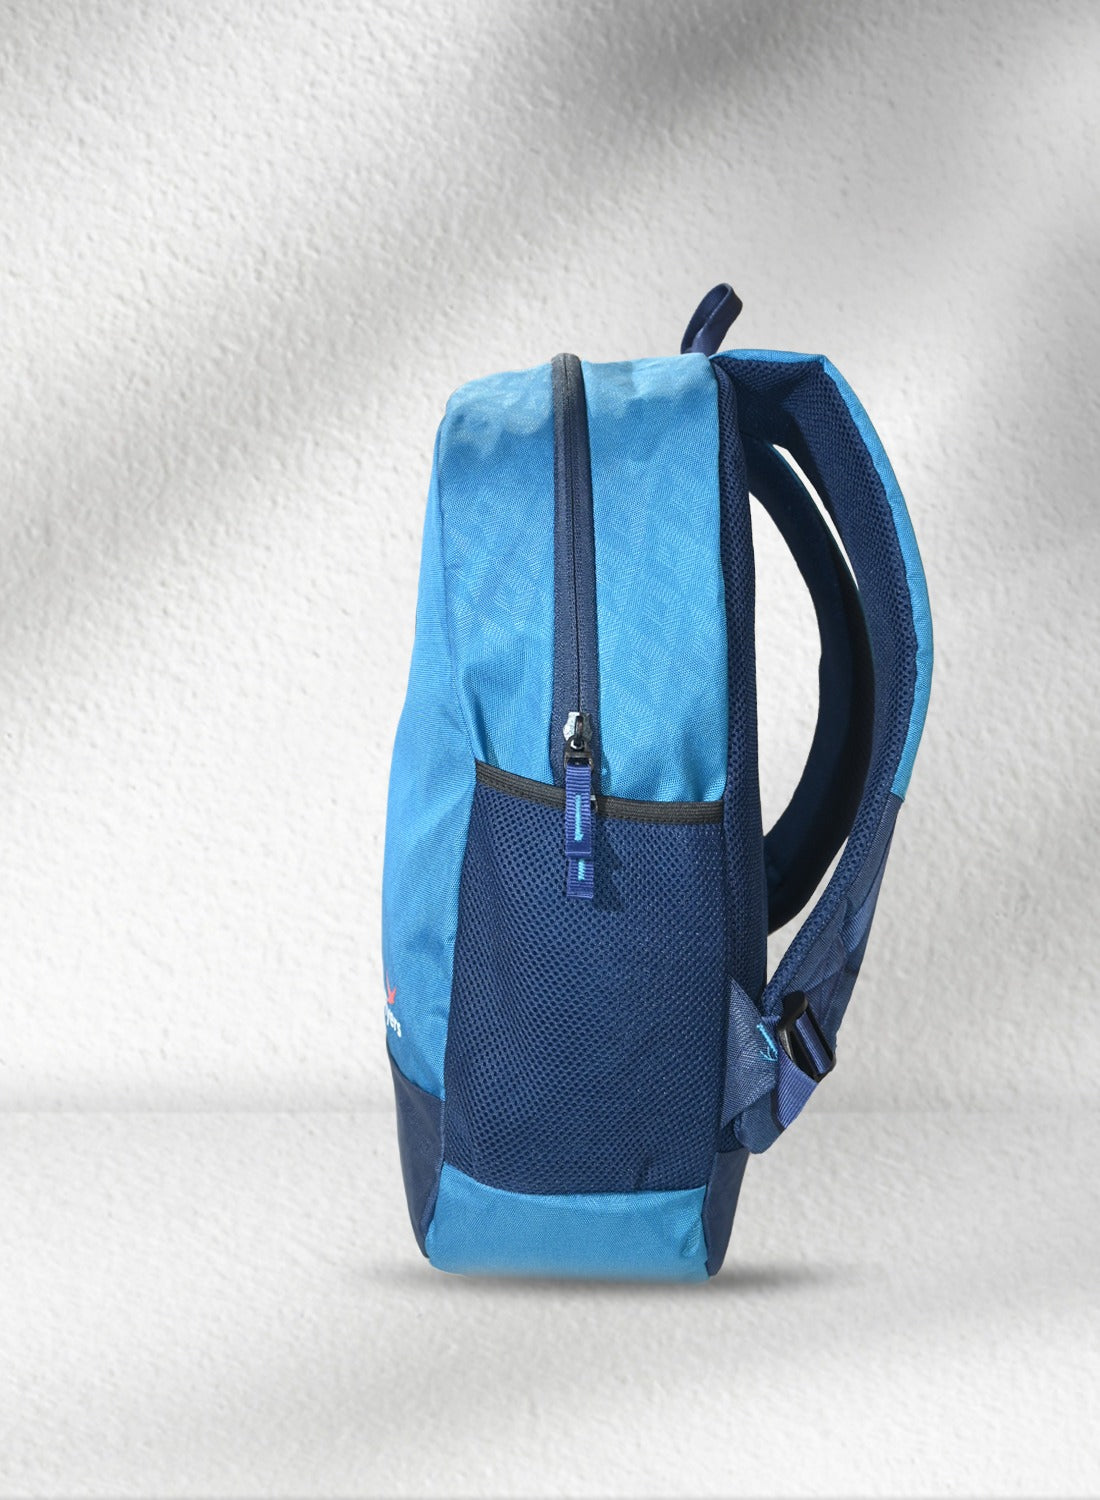 HiFlyers Casual/School/College Backpack -Aqua Blue